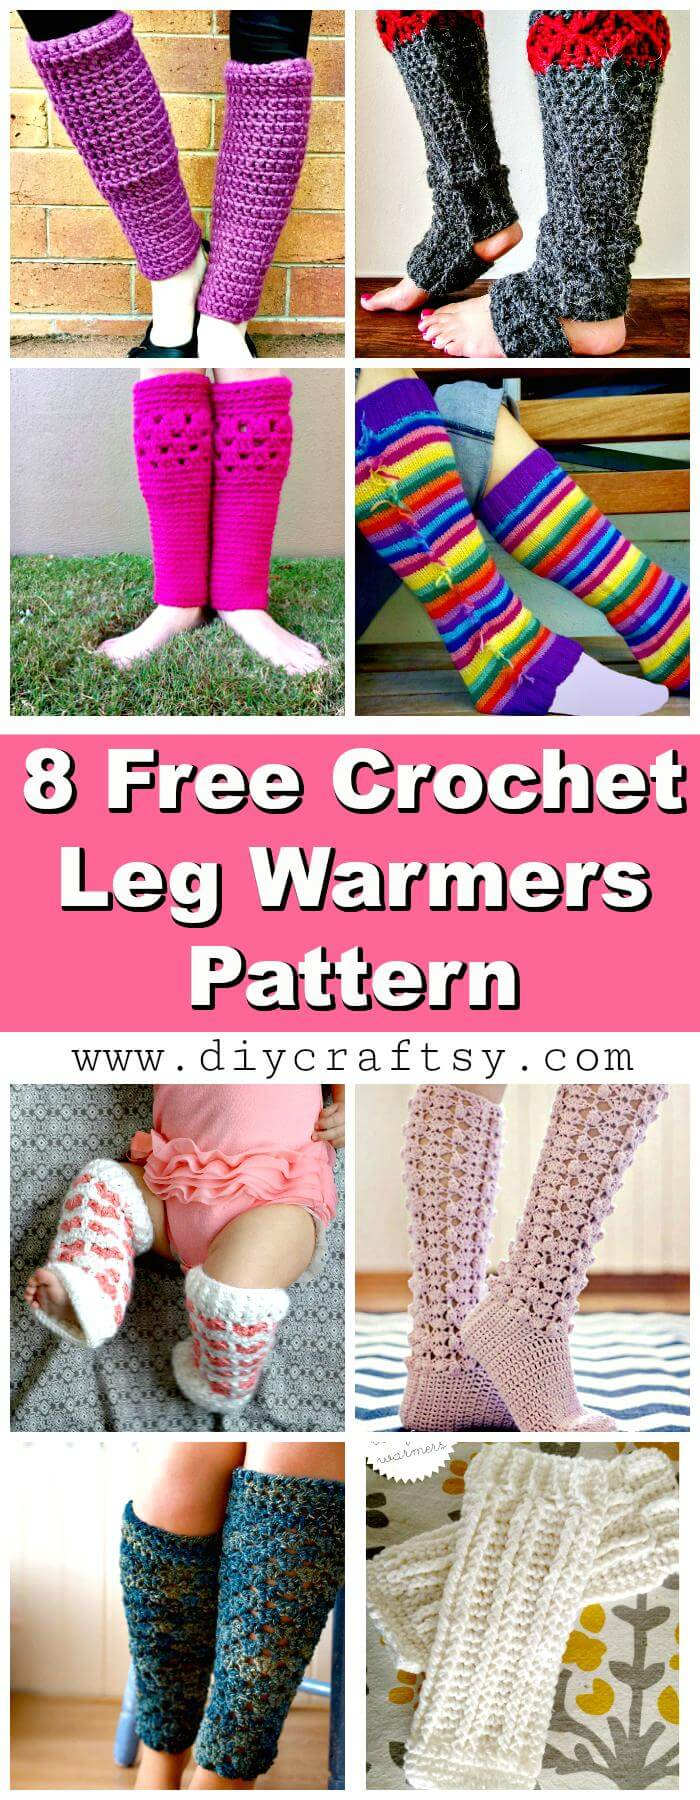 Free Crochet Leg Warmer Patterns Crochet Leg Warmers 8 Free Crochet Leg Warmer Patterns Diy Crafts